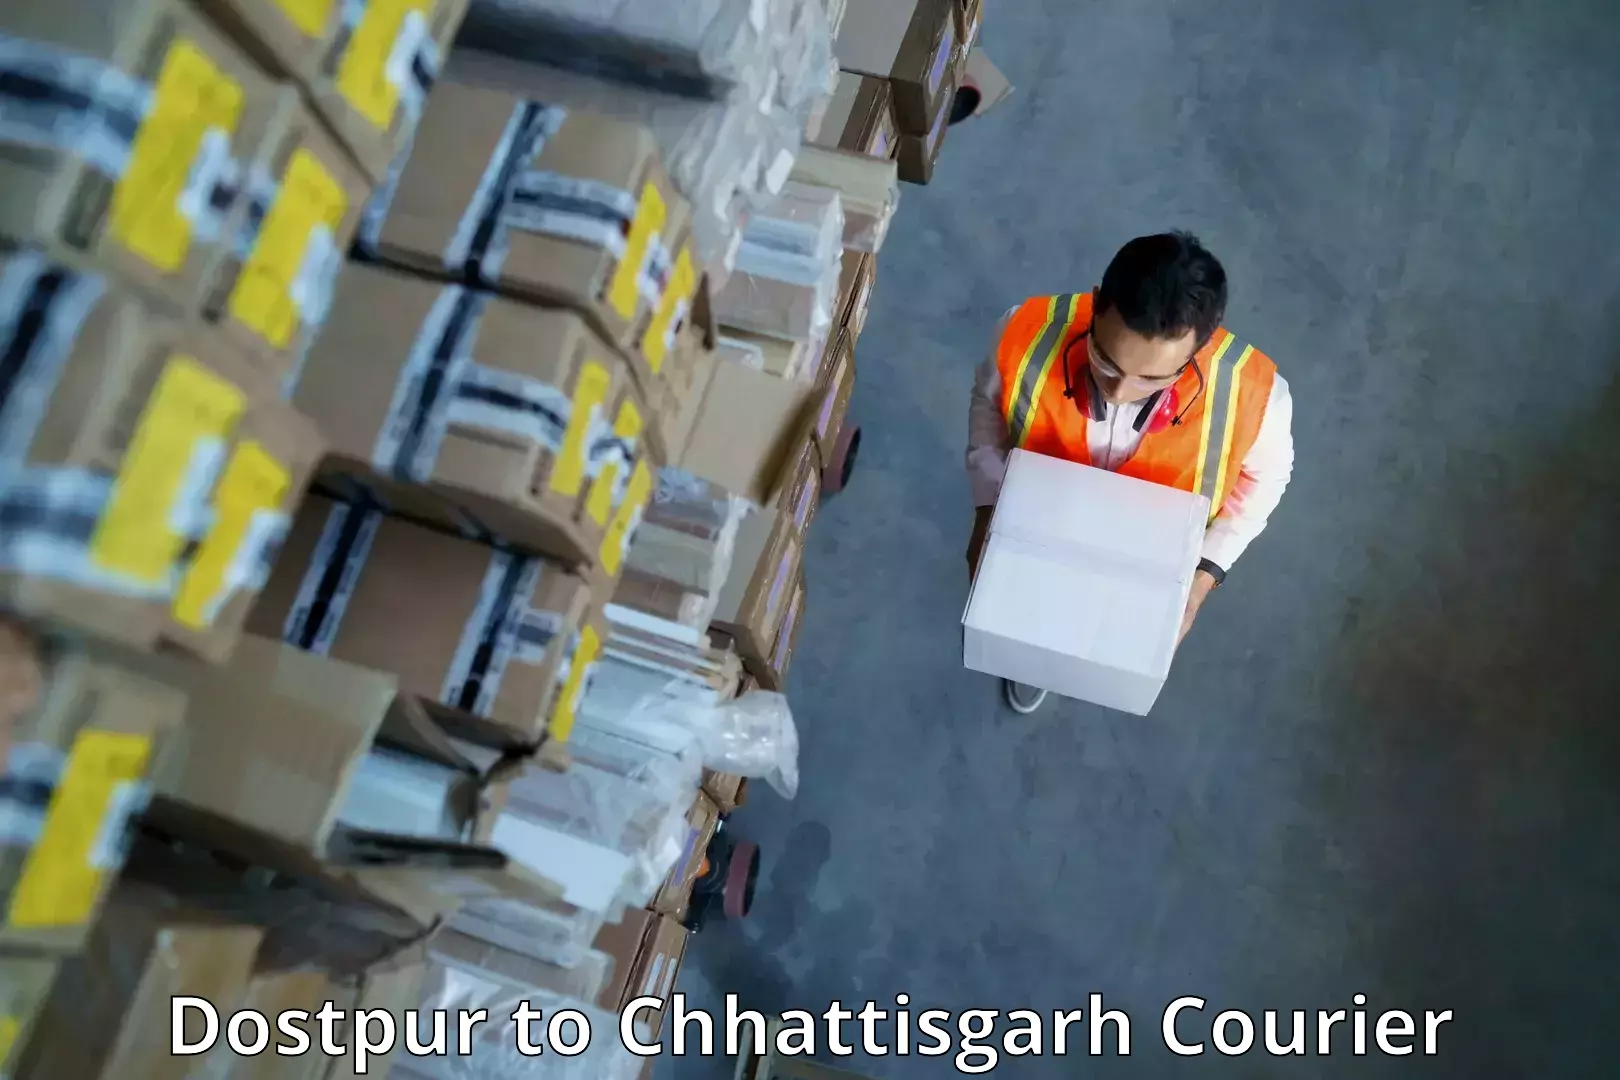 On-call courier service Dostpur to Korea Chhattisgarh